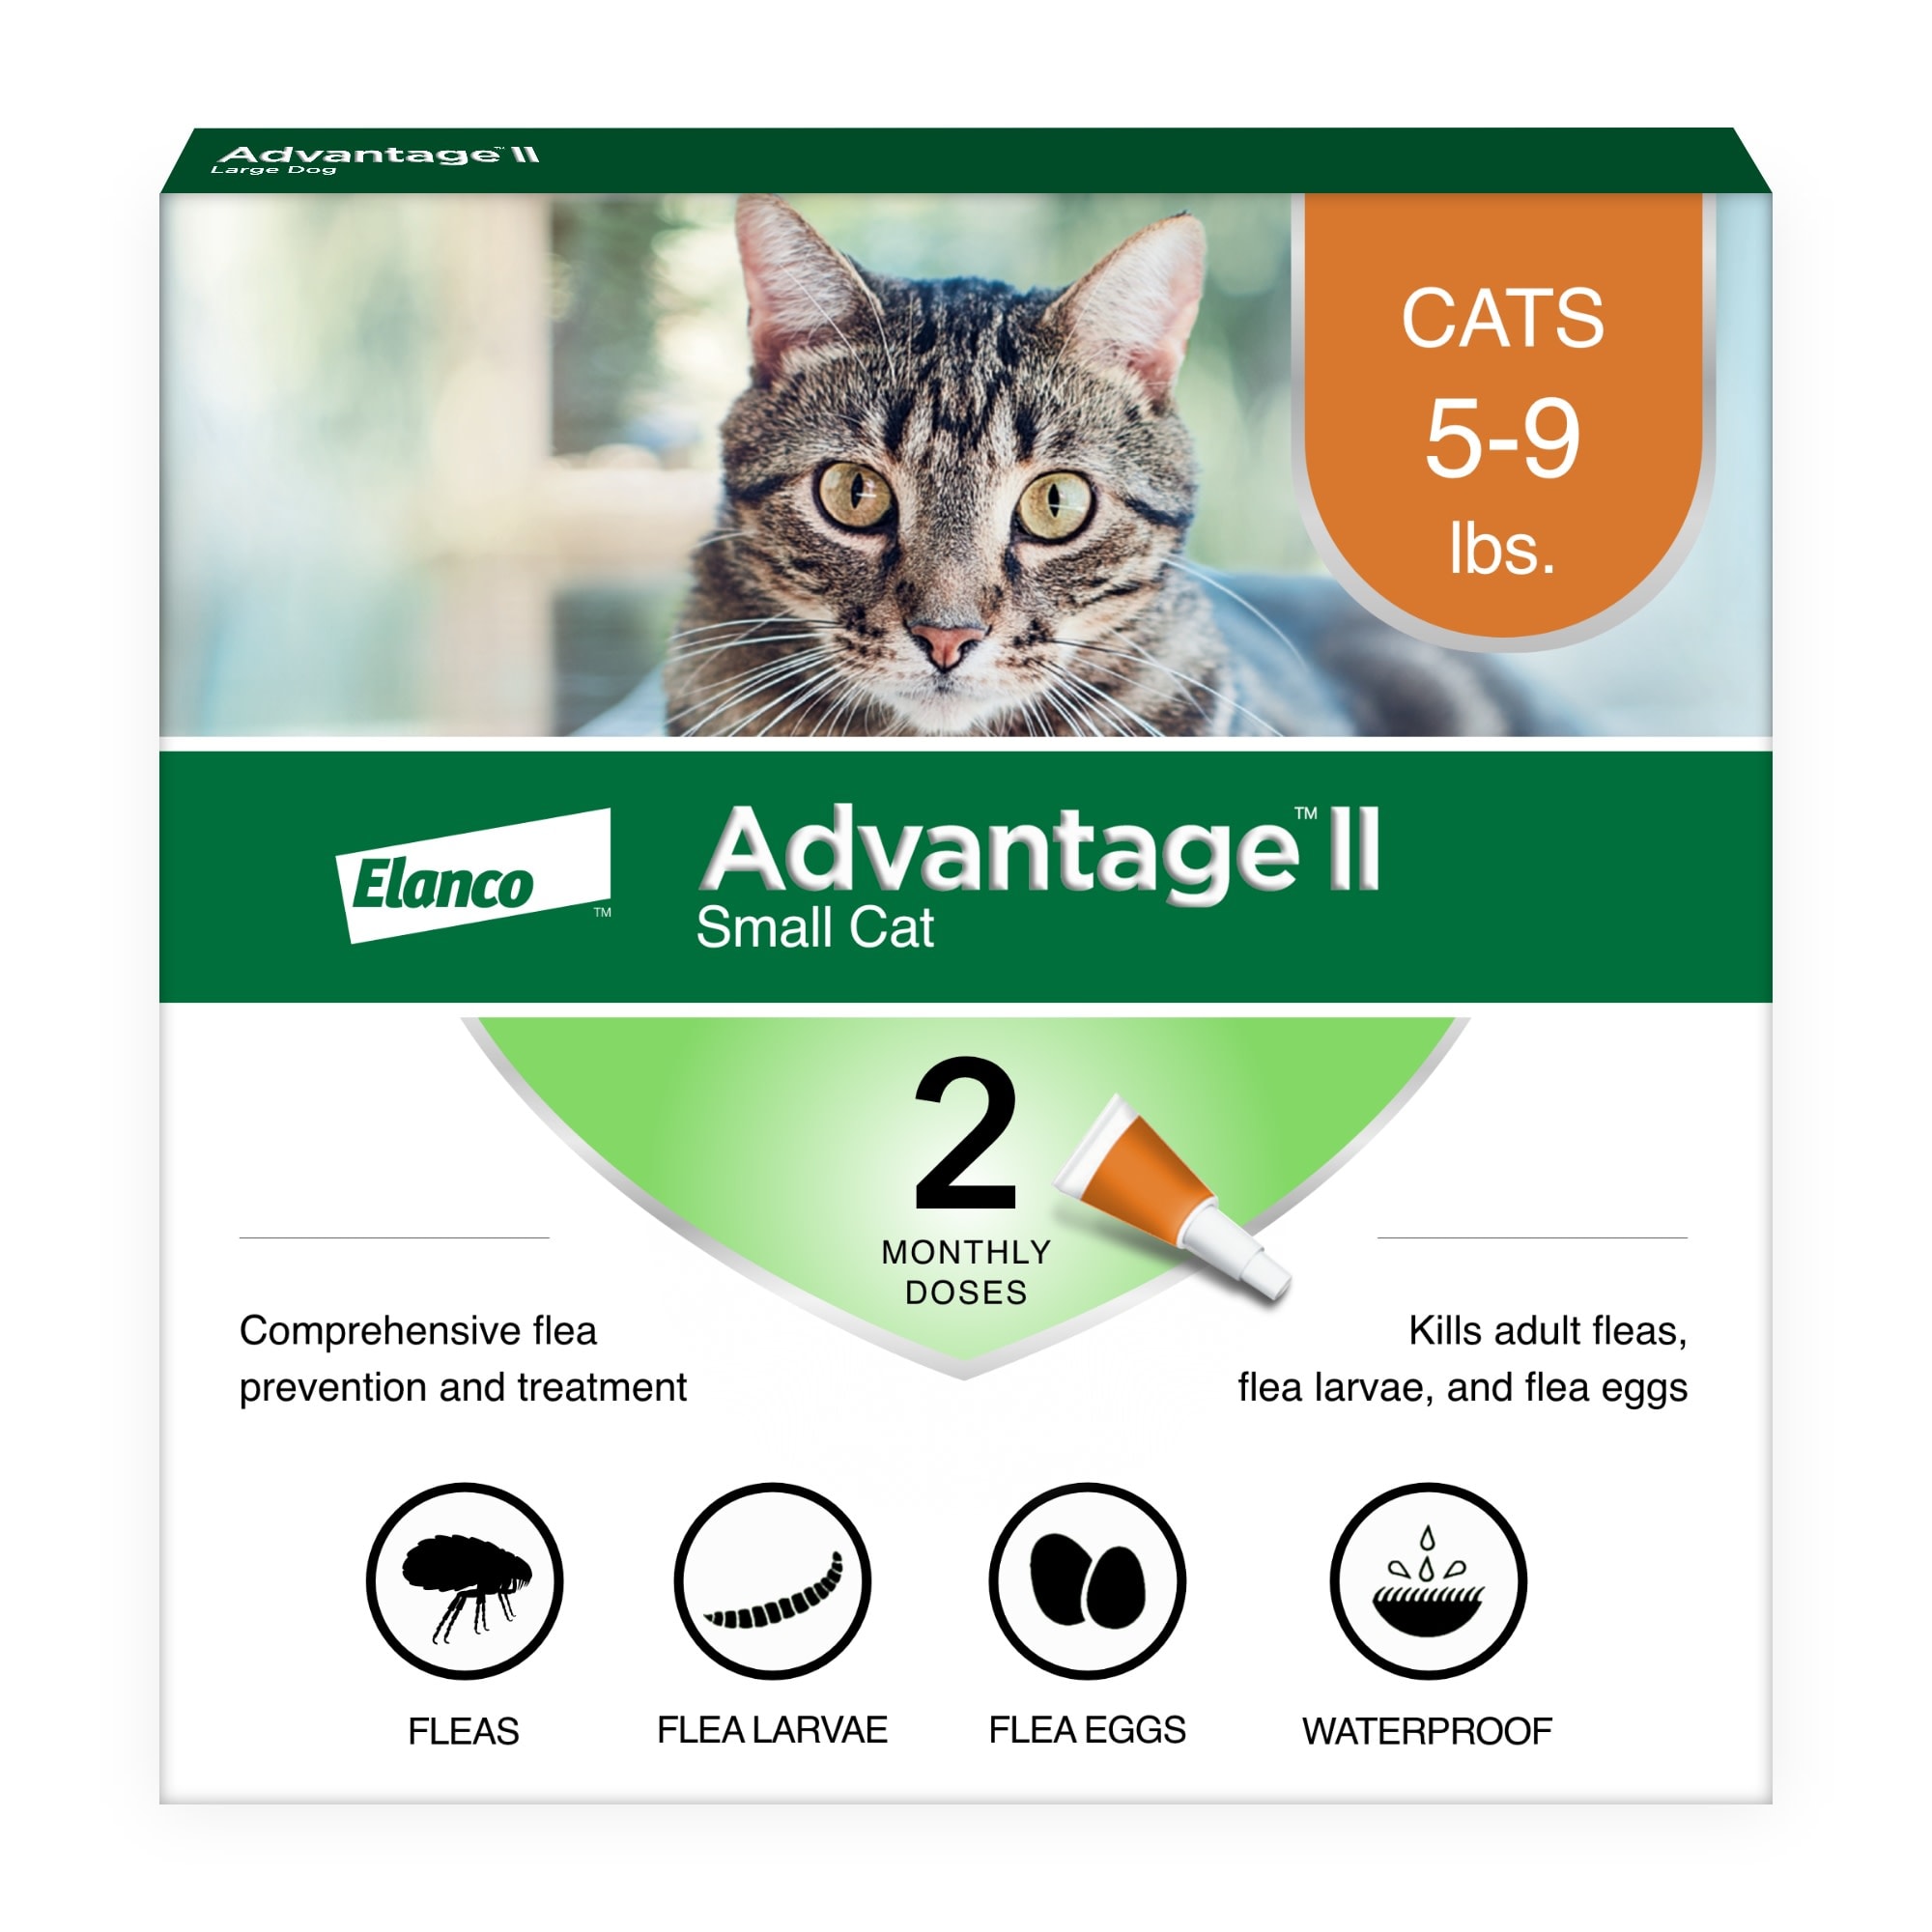 advantage ii for cats